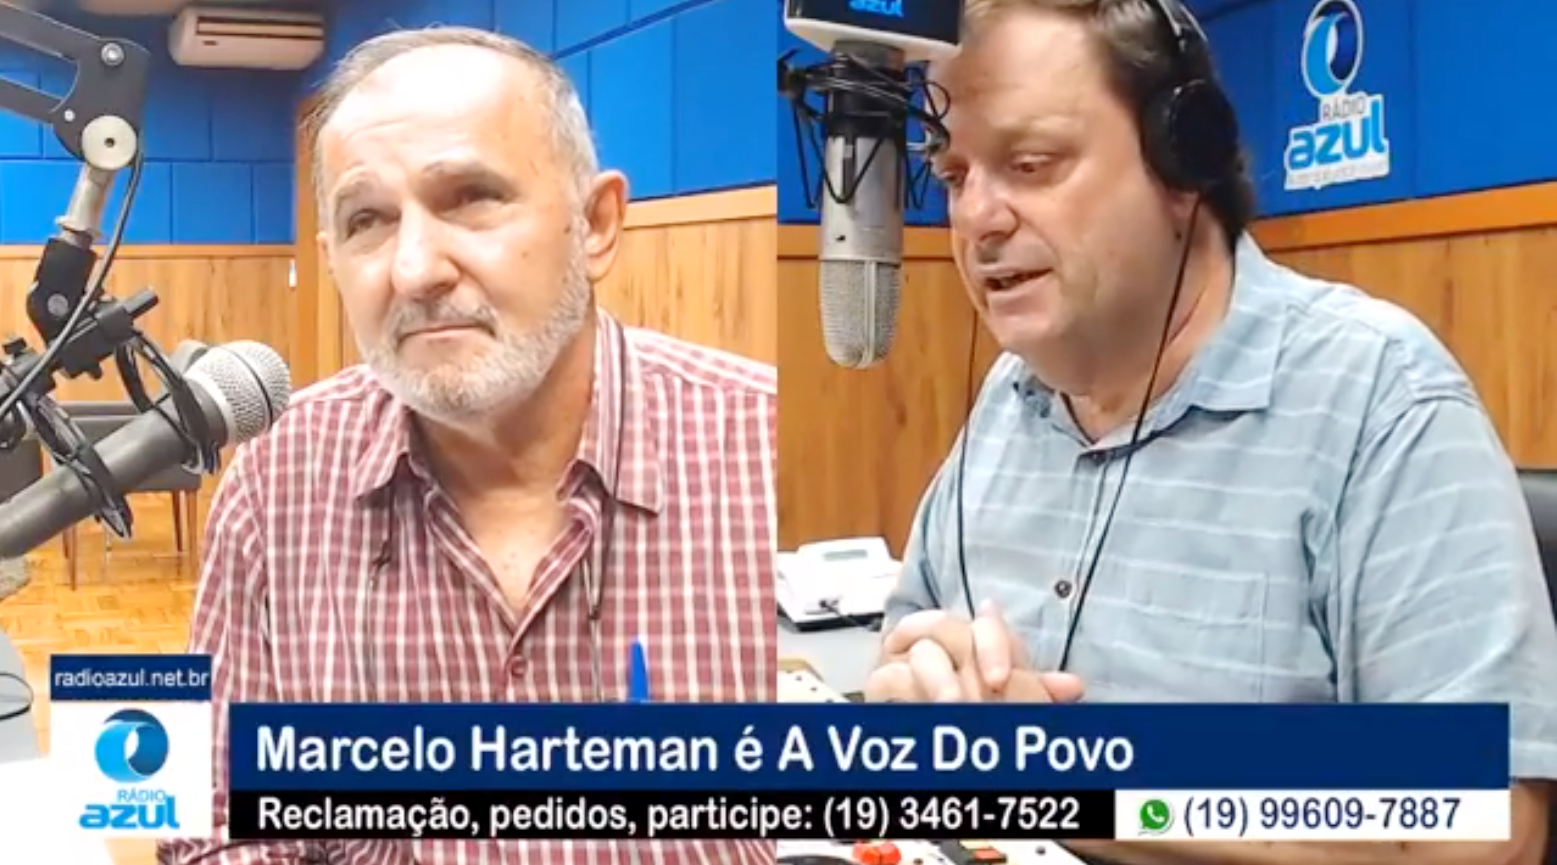 Rádio Azul | Tesoureiro Aires Ribeiro participa do programa “A Voz do Povo”